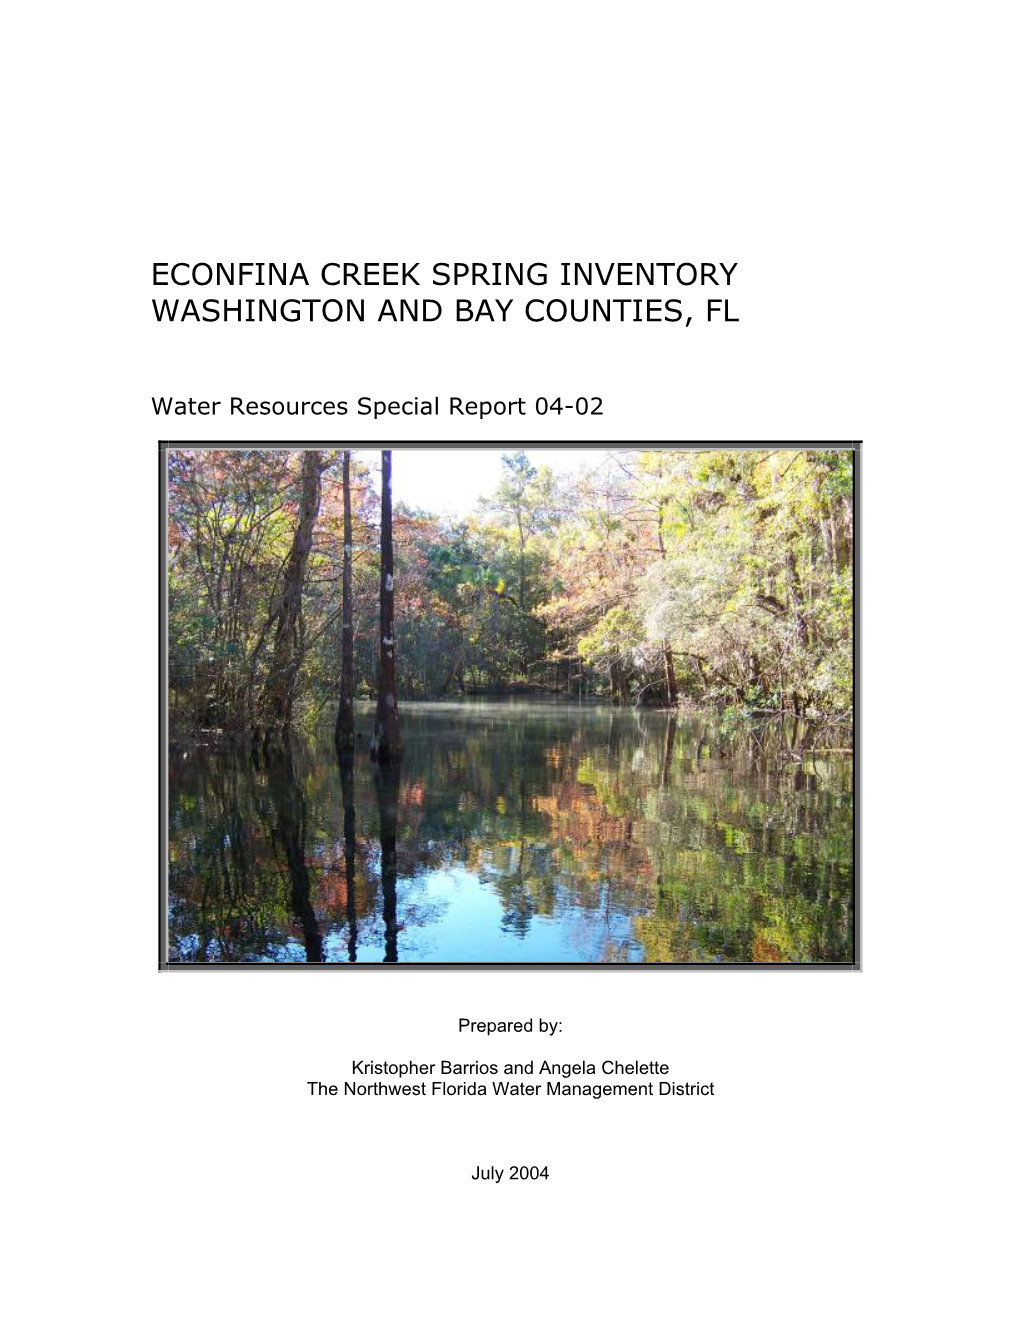 Econfina Creek Spring Inventory Washington and Bay Counties, Fl